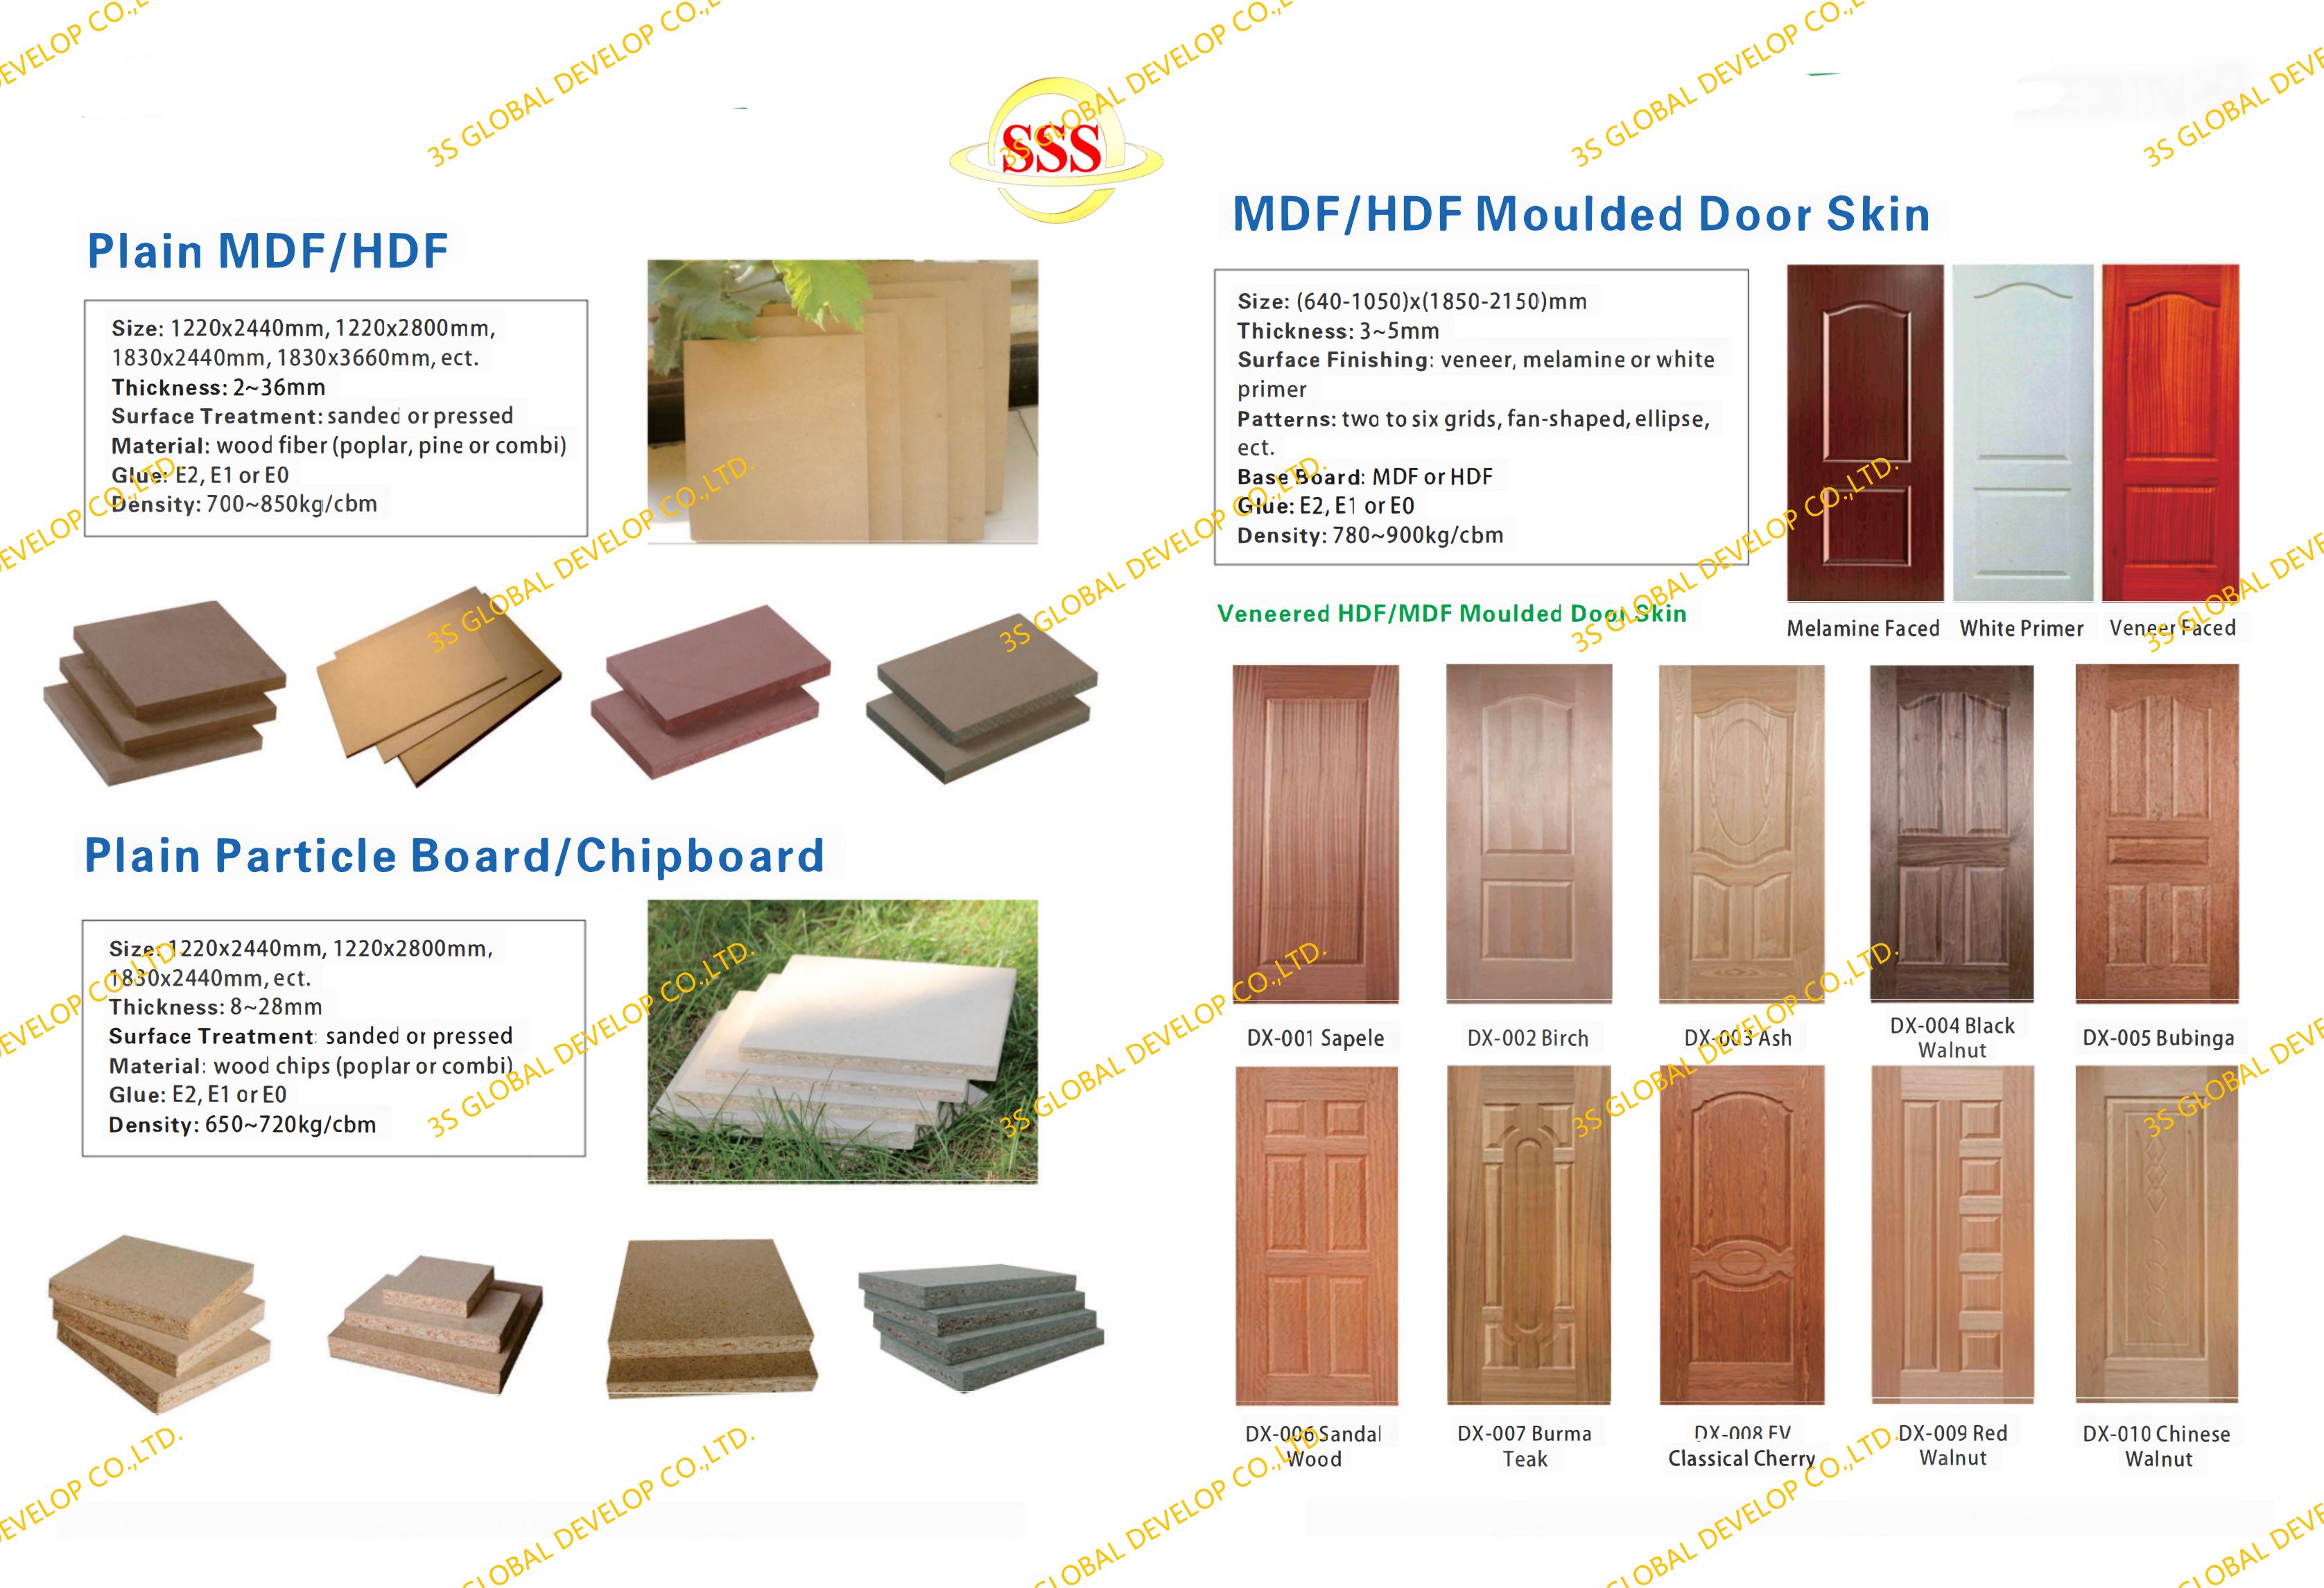 Plain MDF/HDF, Plain particle board/chipboard, MDF/HDF MOULDED DOOR SKIN